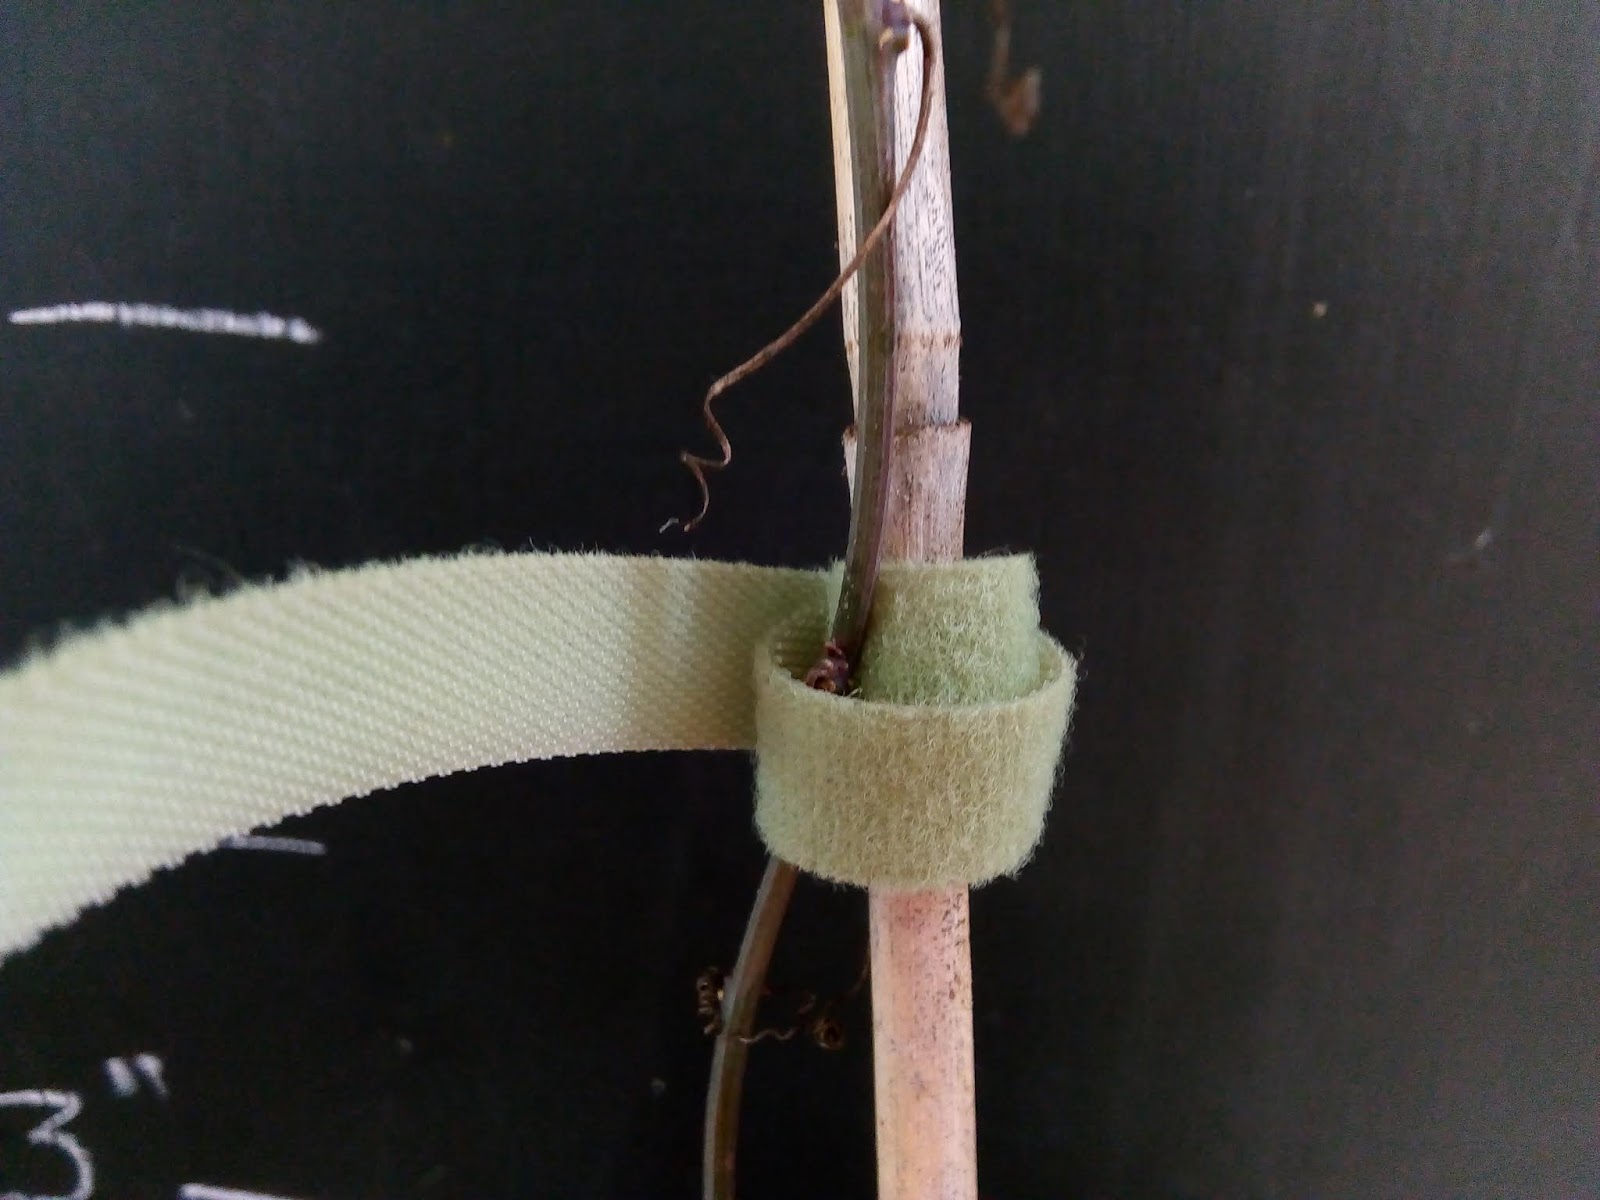 Rachel the Gardener: Velcro plant ties - Fail!